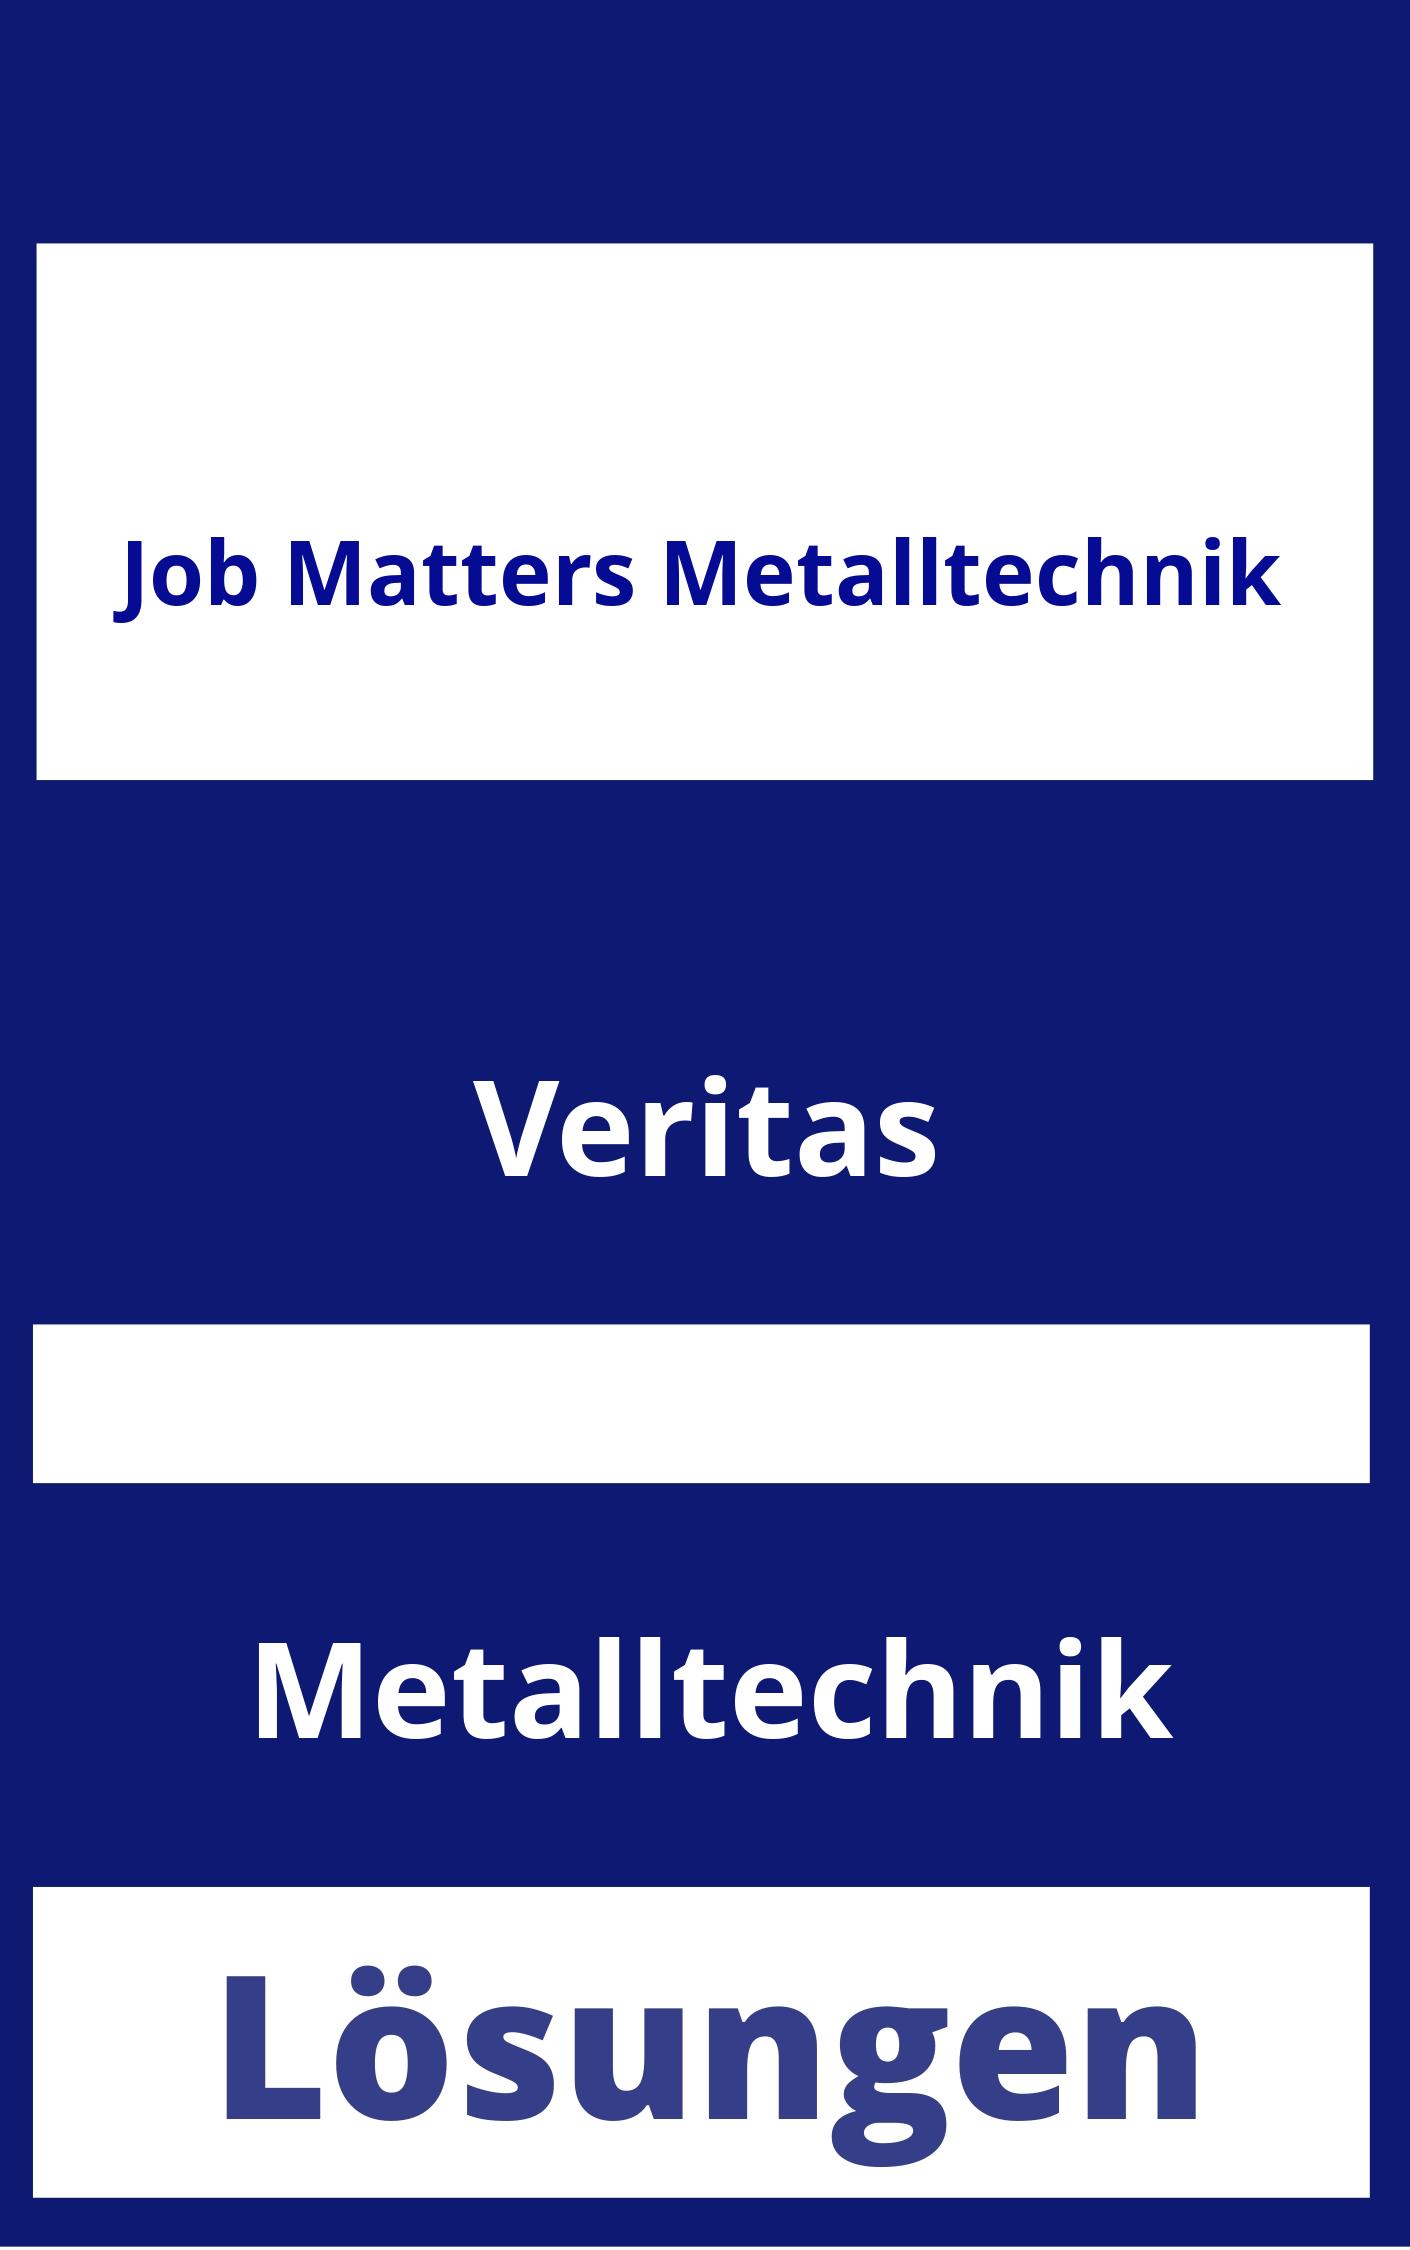 Job Matters Metalltechnik